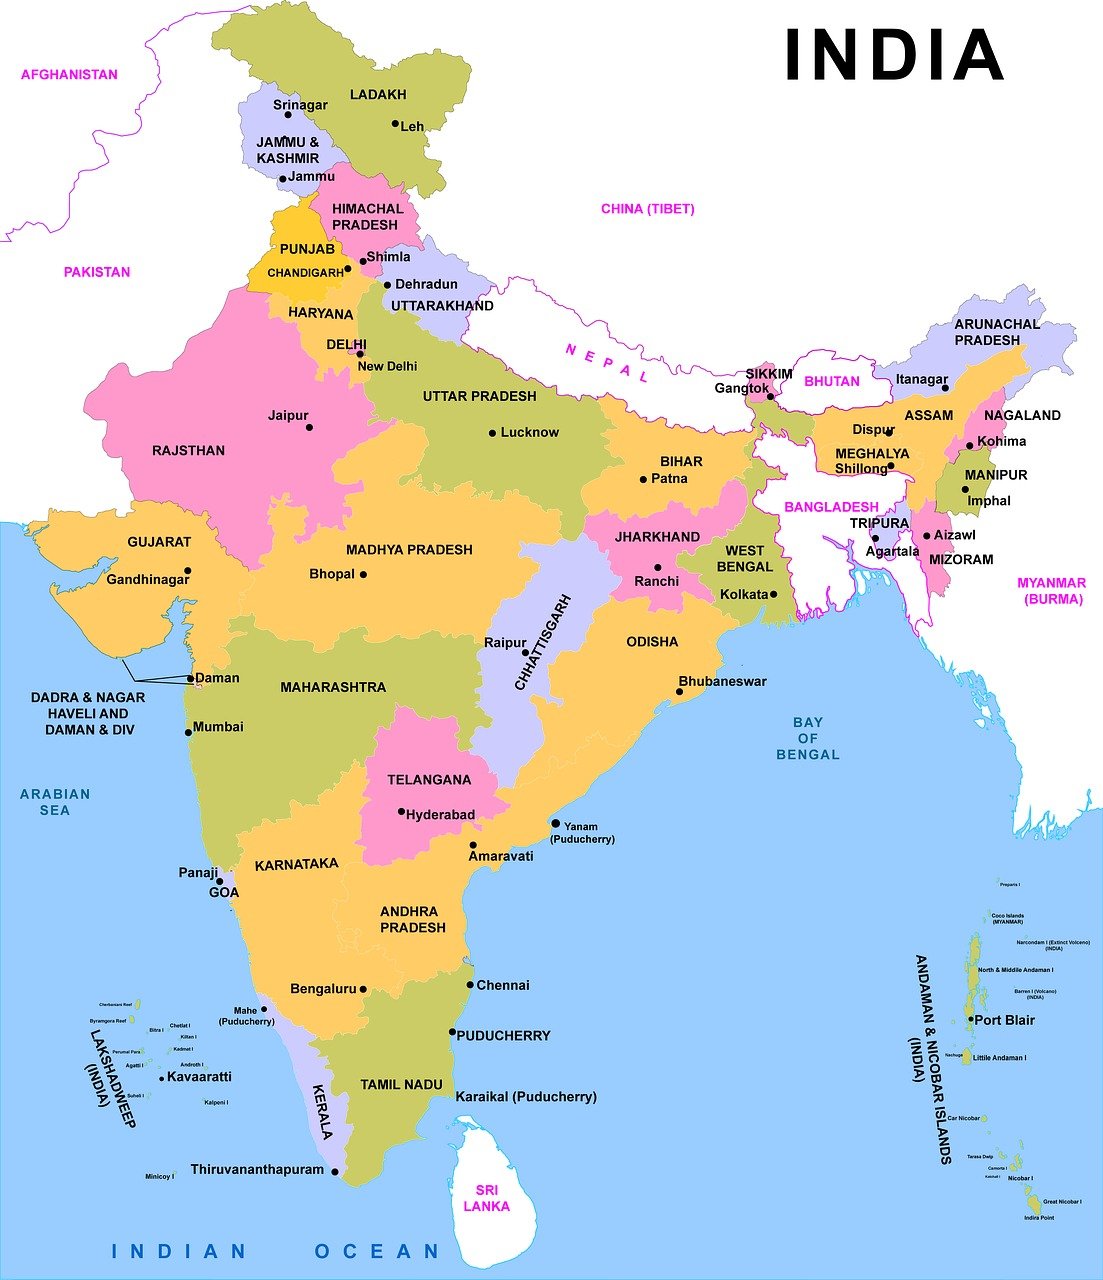 Largest Union territory of India